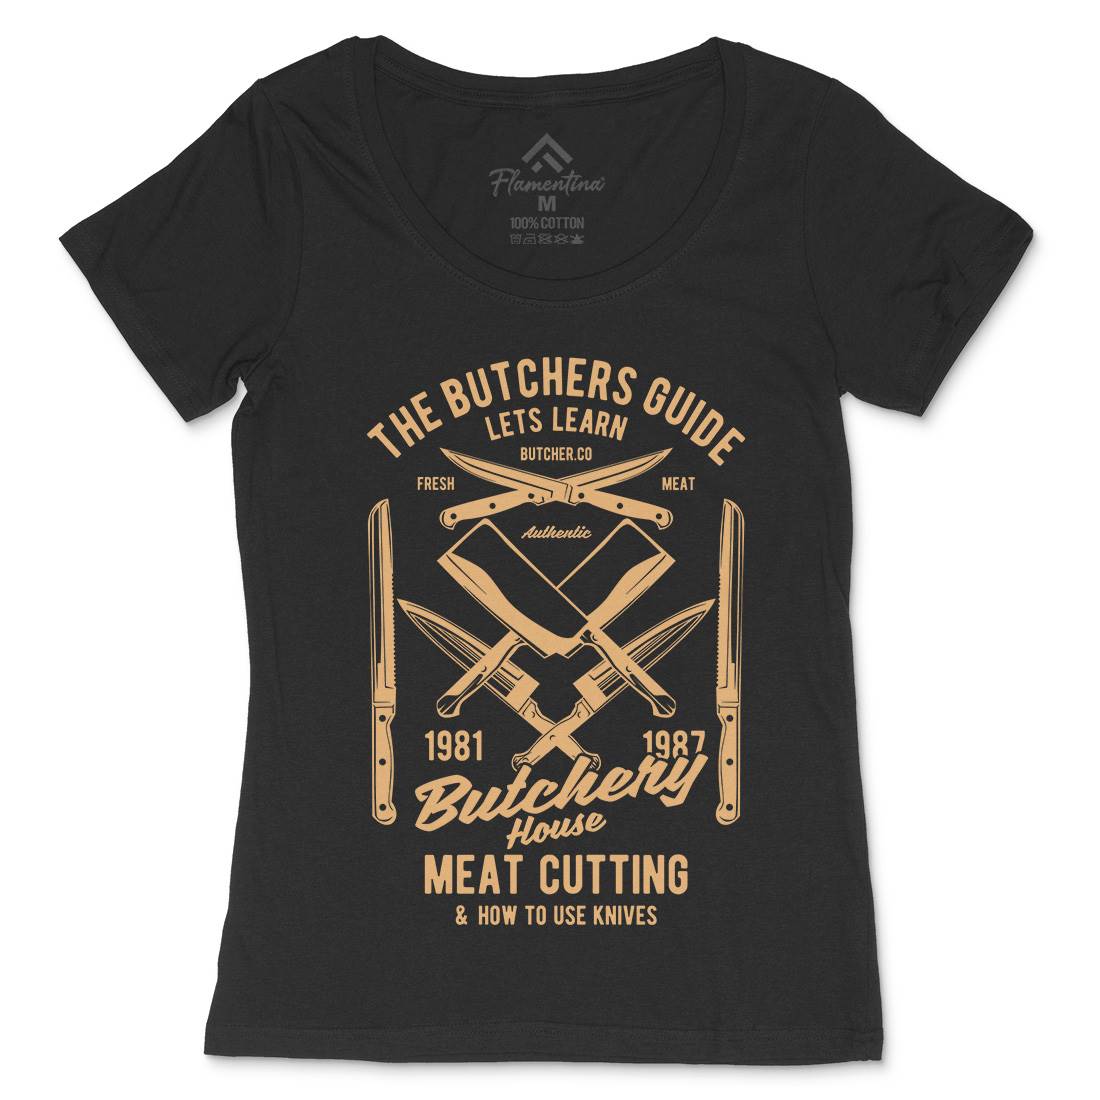 Butchery House Womens Scoop Neck T-Shirt Retro B190